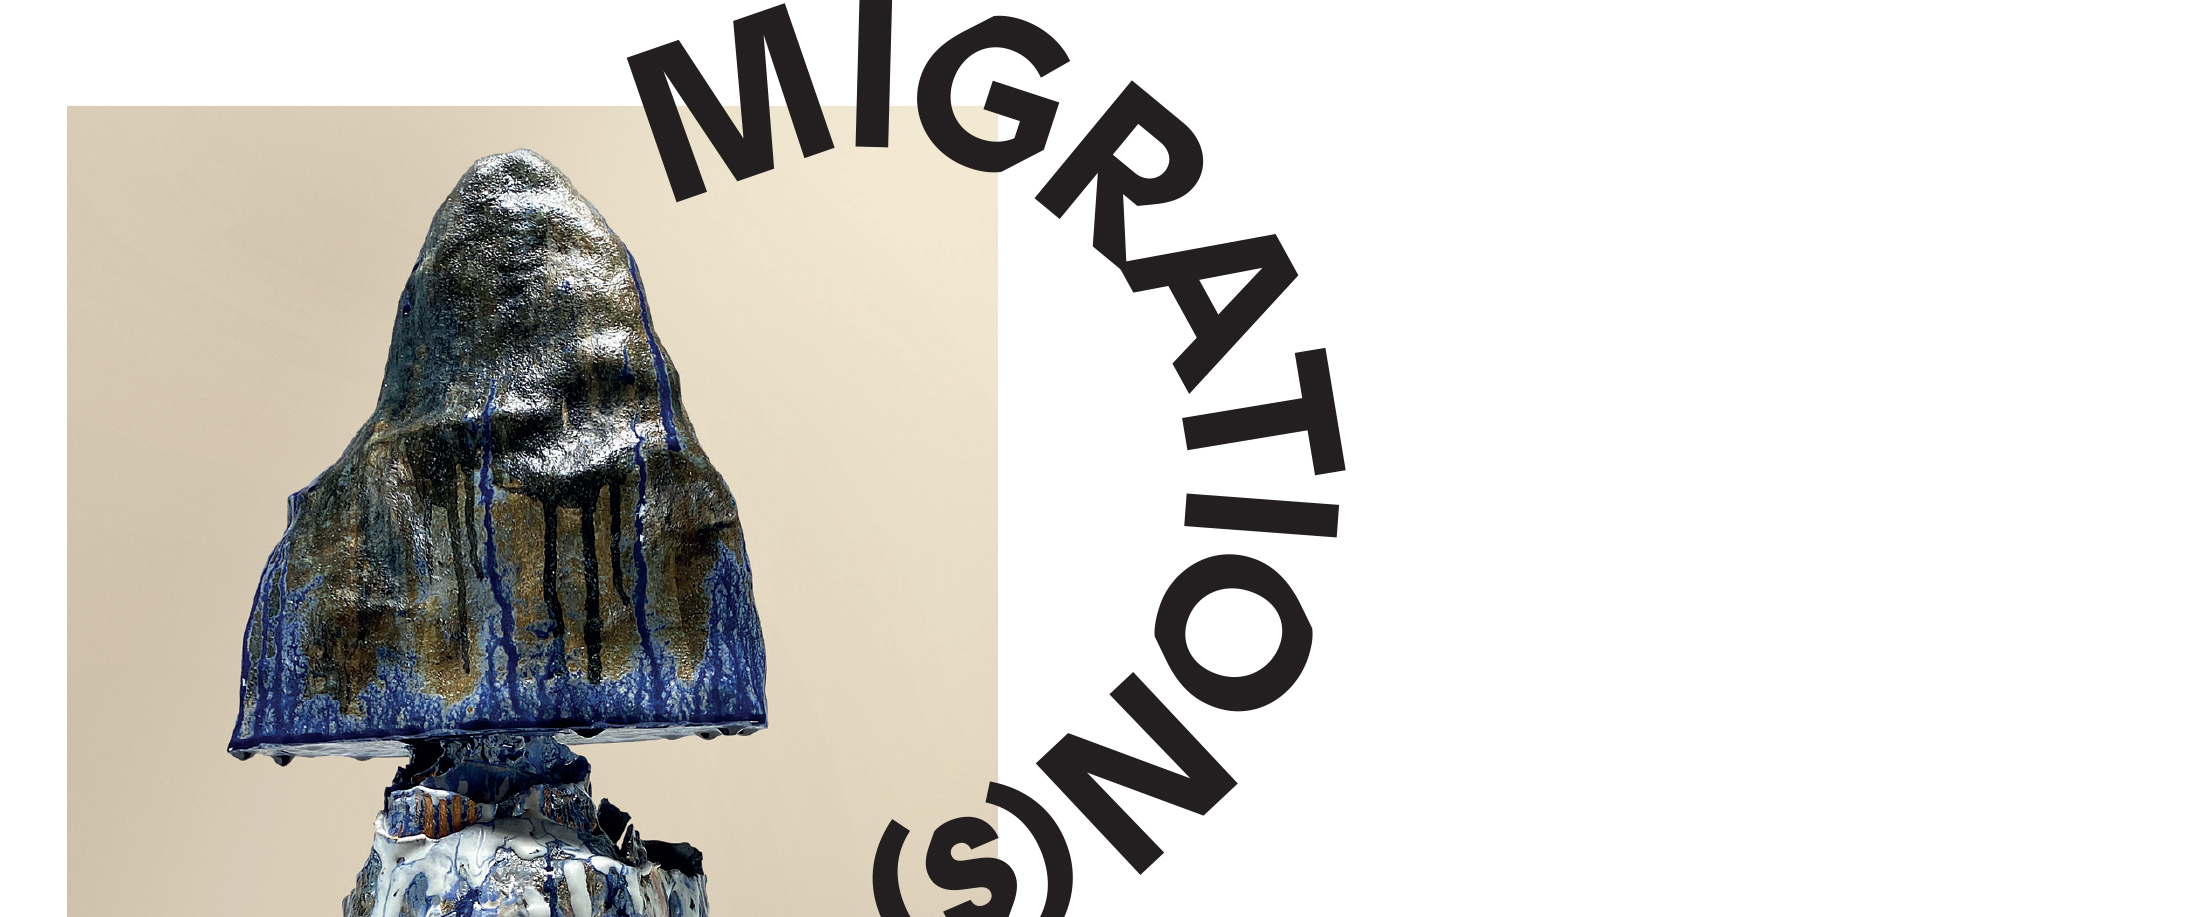 exposition Migration, musée Ariana, Genève, 2022-2023